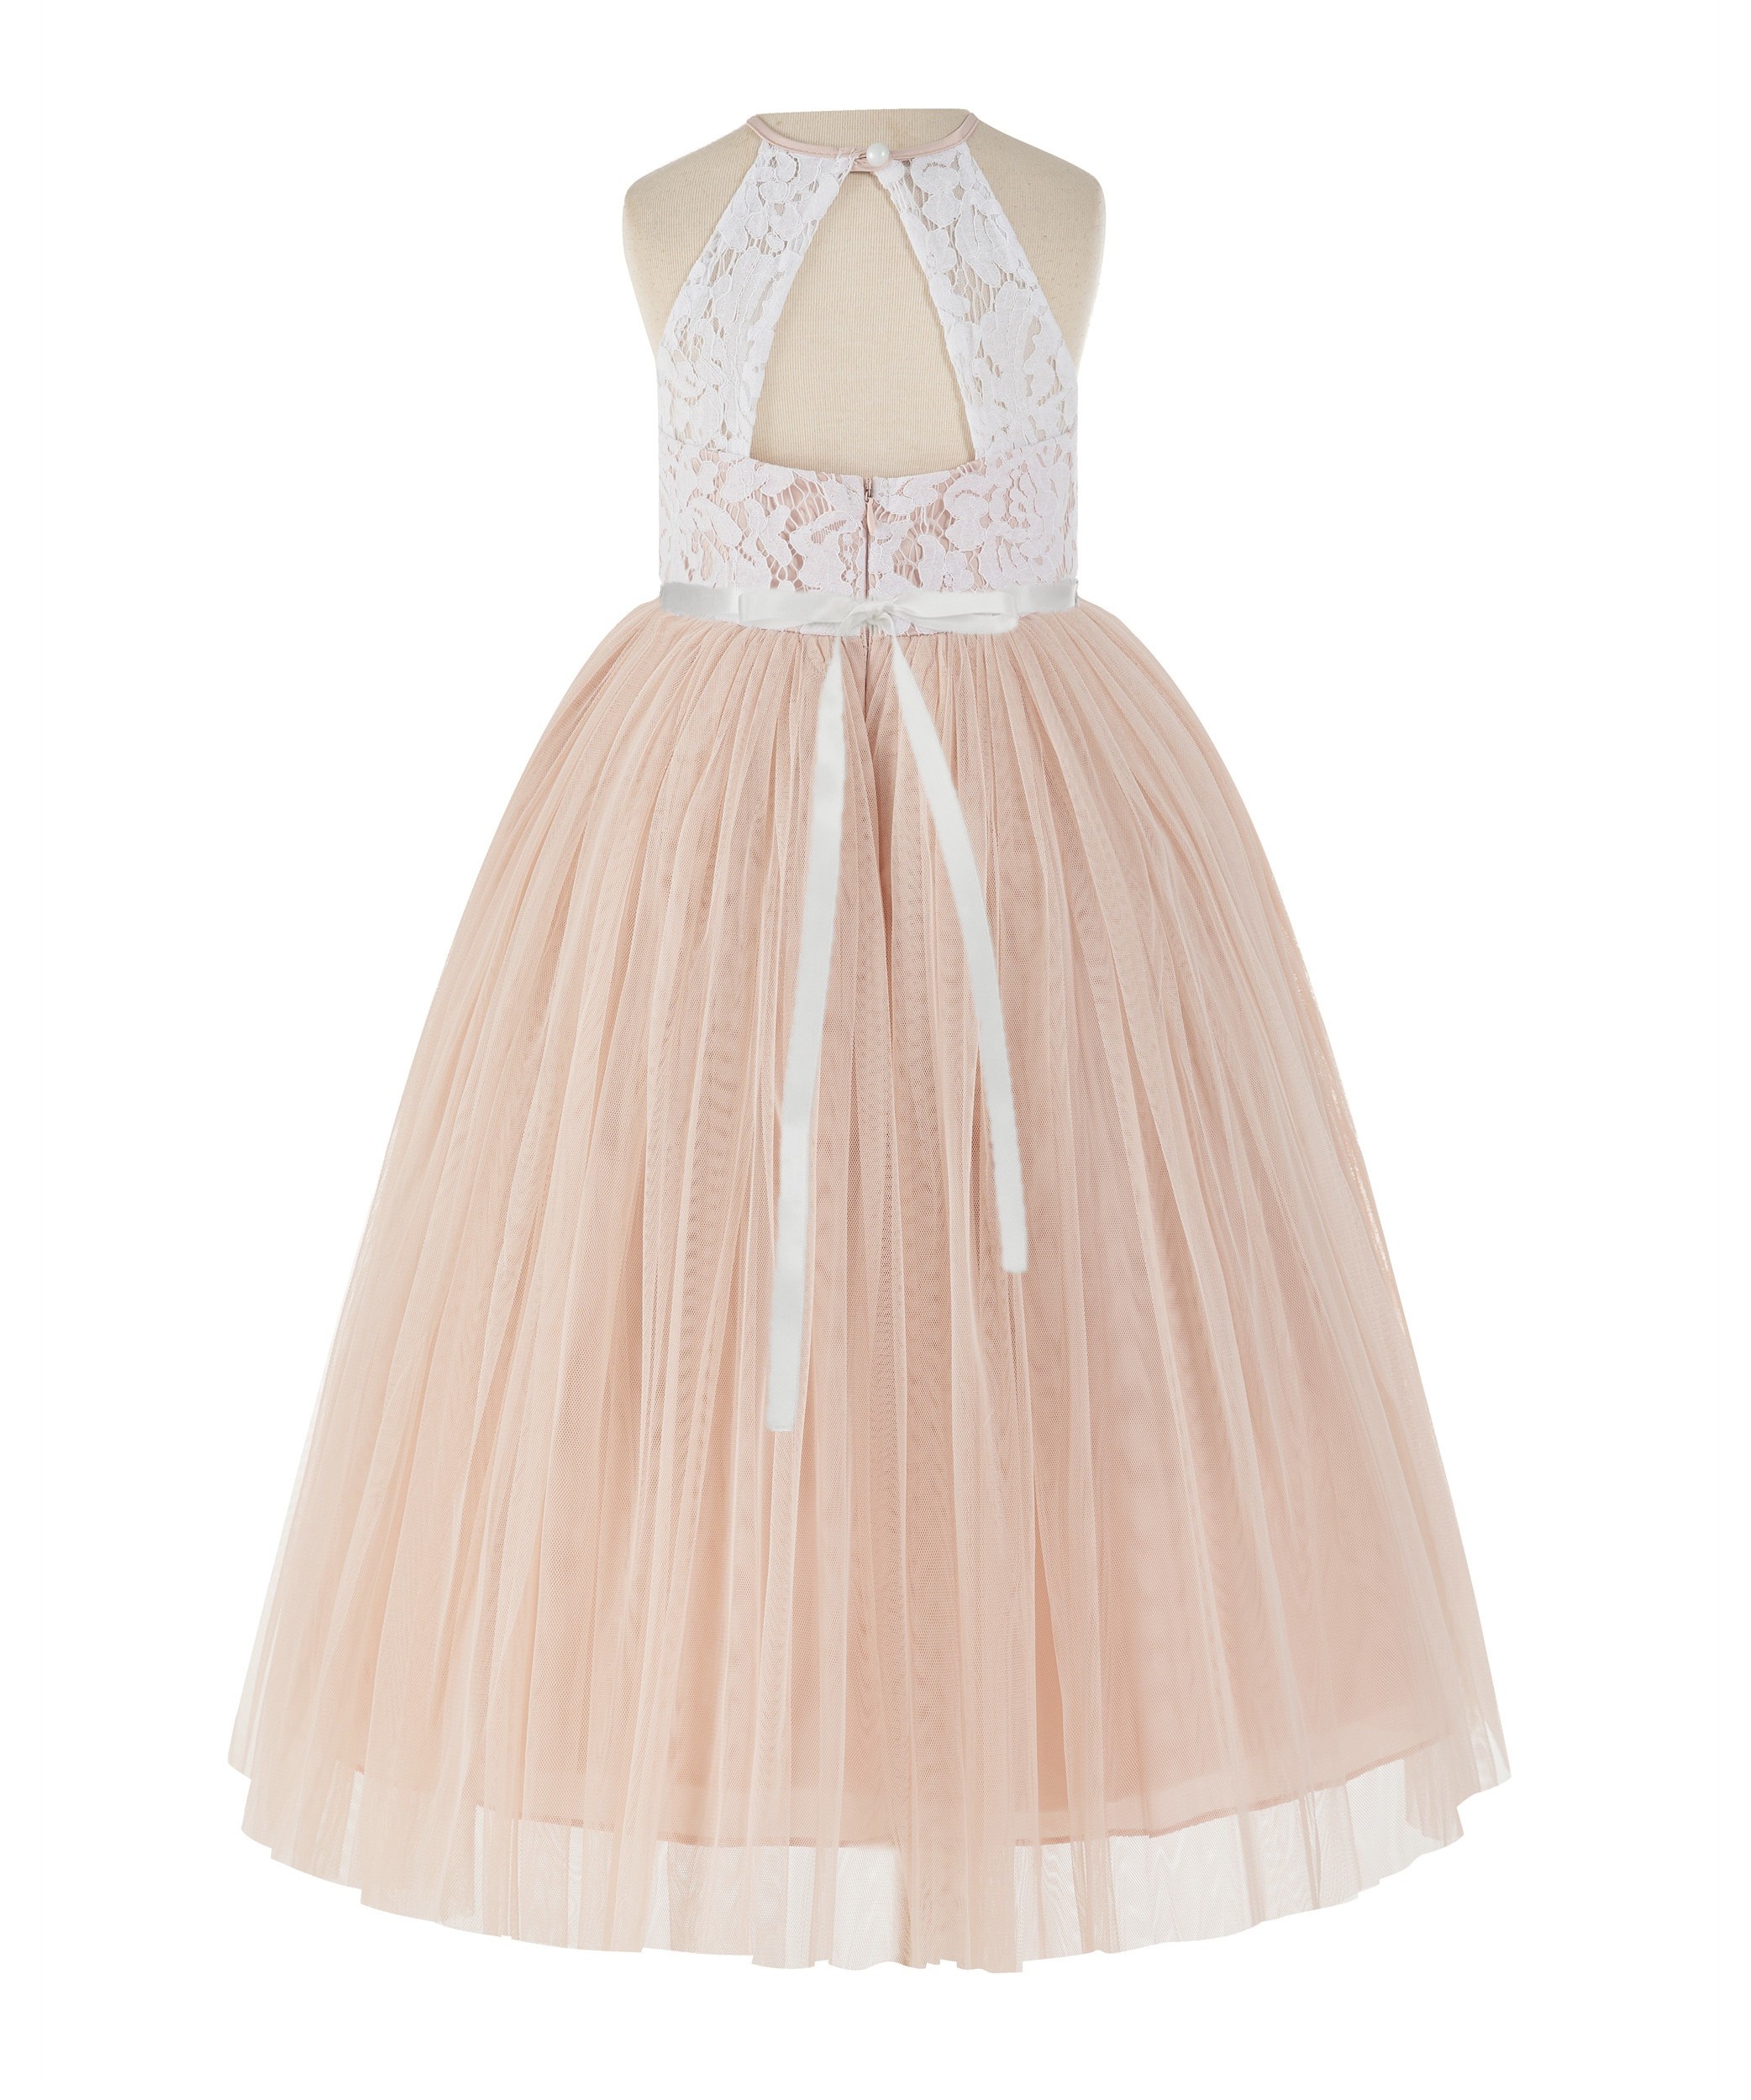 Blush Pink / White Lace Halter Flower Girl Dress Lace Back Dress 213